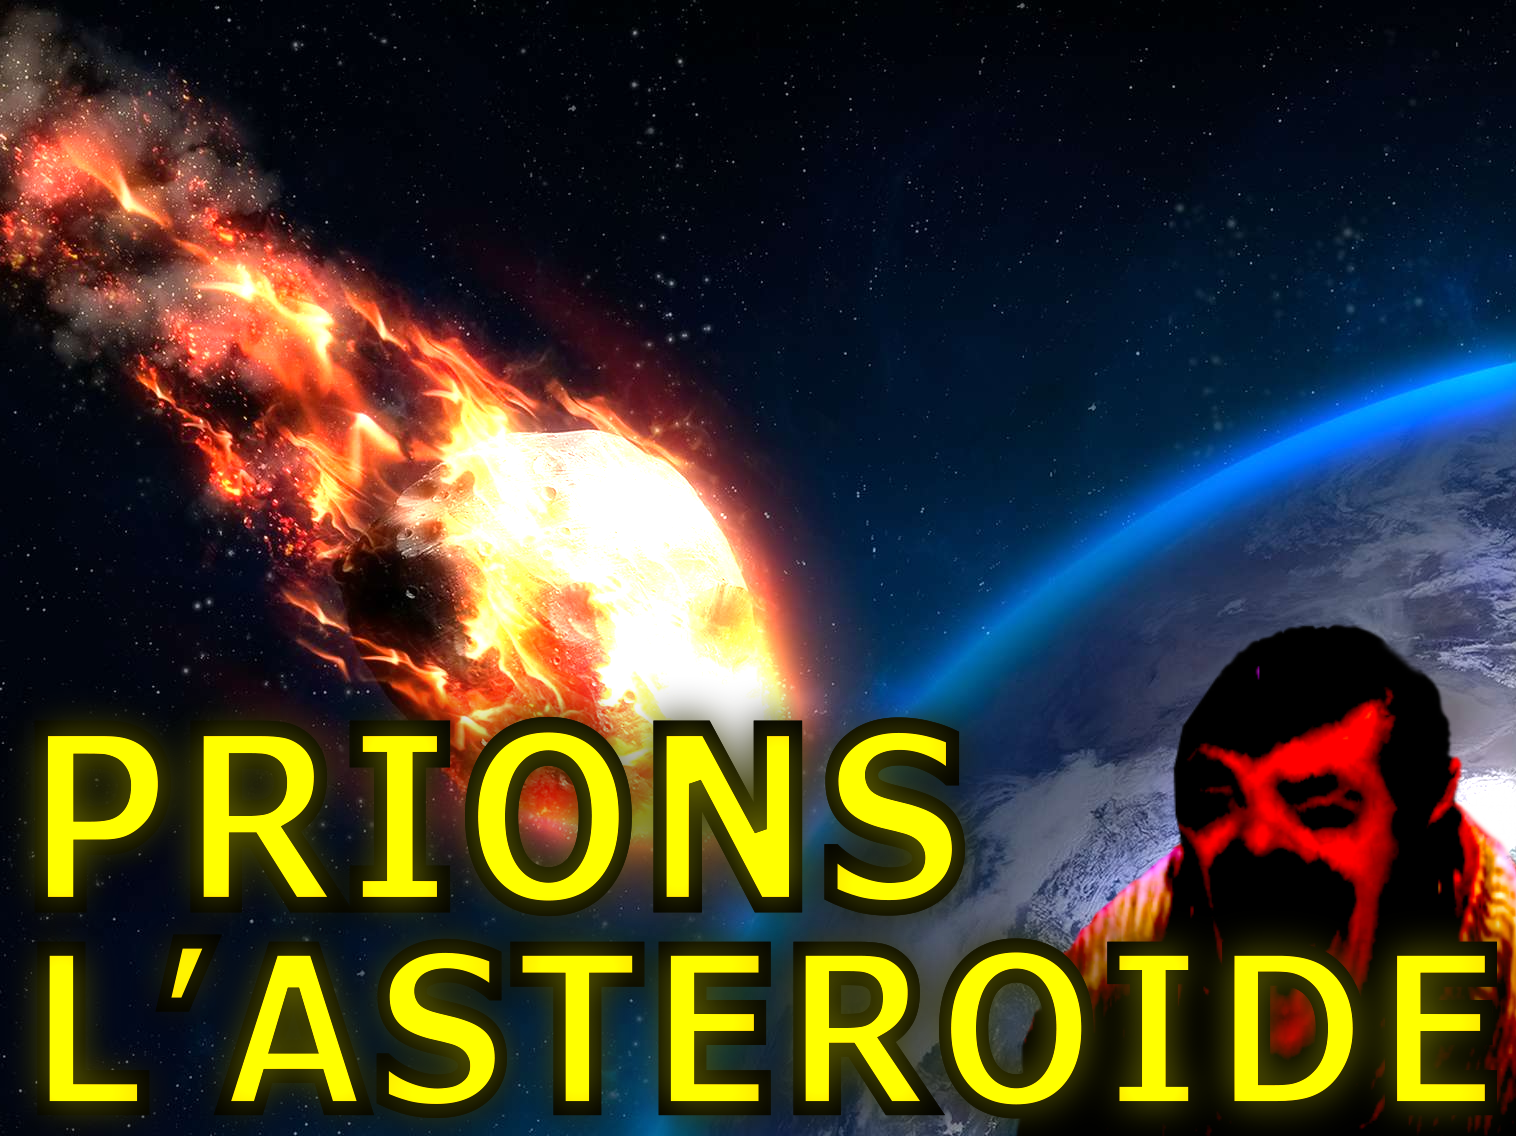 risitas atome purification nucleaire cosmique espace ww3 guerre alerte meteorite prions explosion asteroide